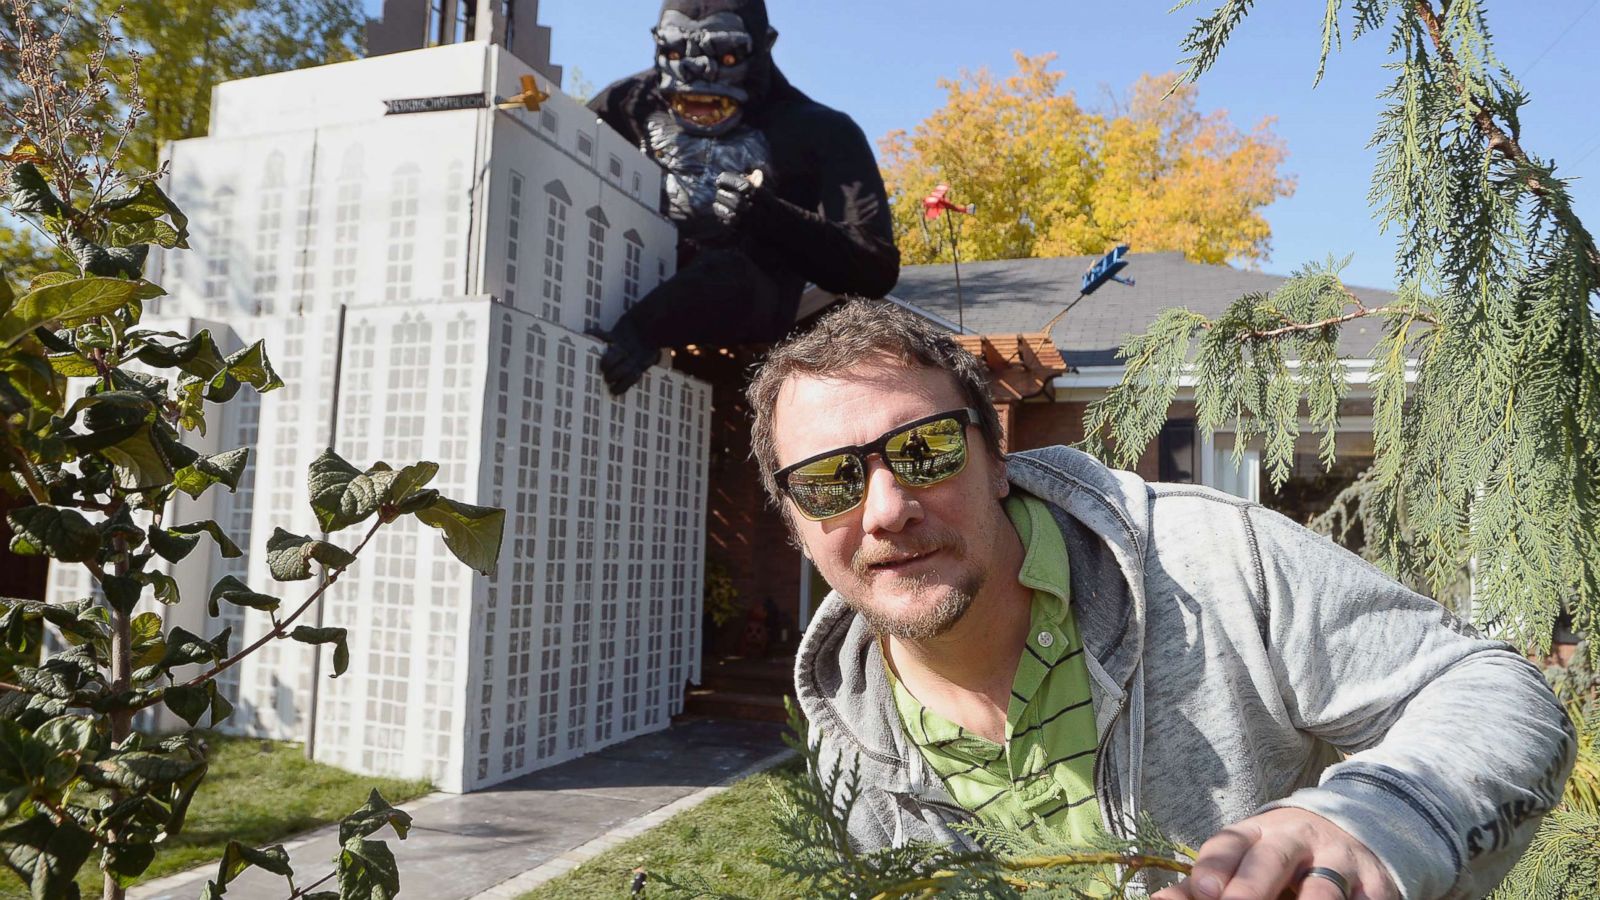 Man builds massive King Kong display in yard for Halloween - ABC News